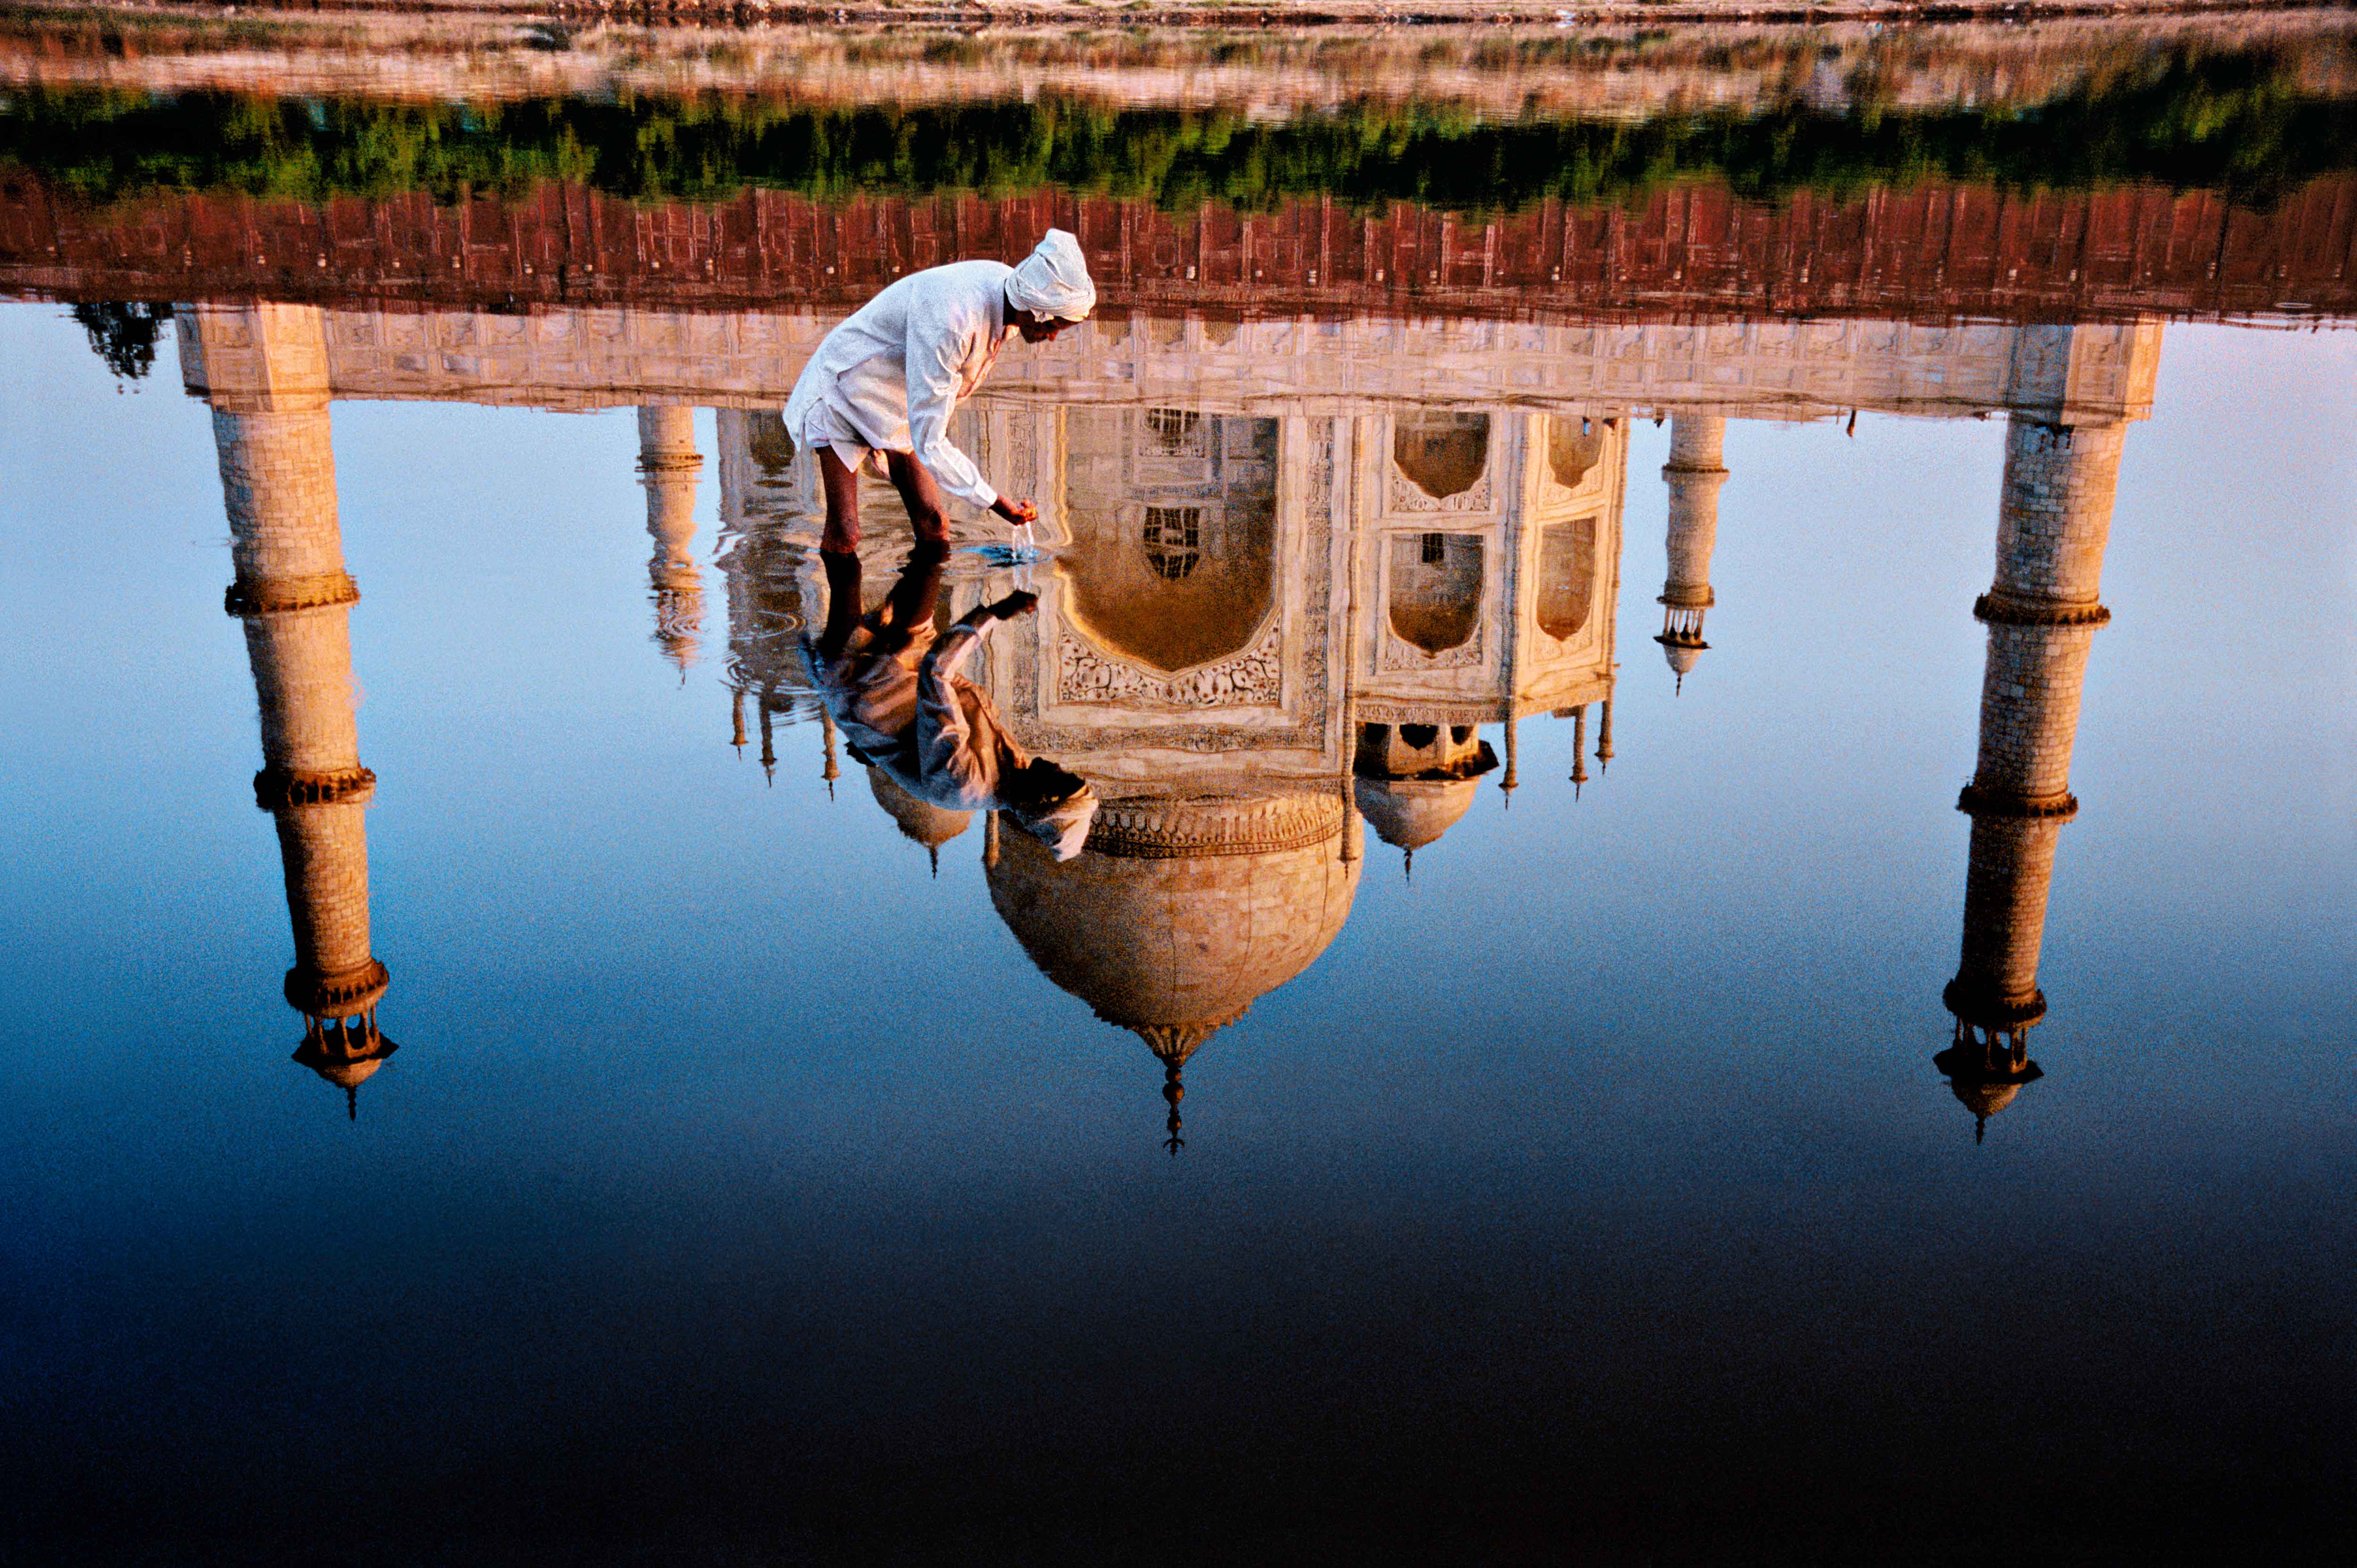 Reflection of the Taj Mahal, Agra, Uttar Pradesh, India, 1999